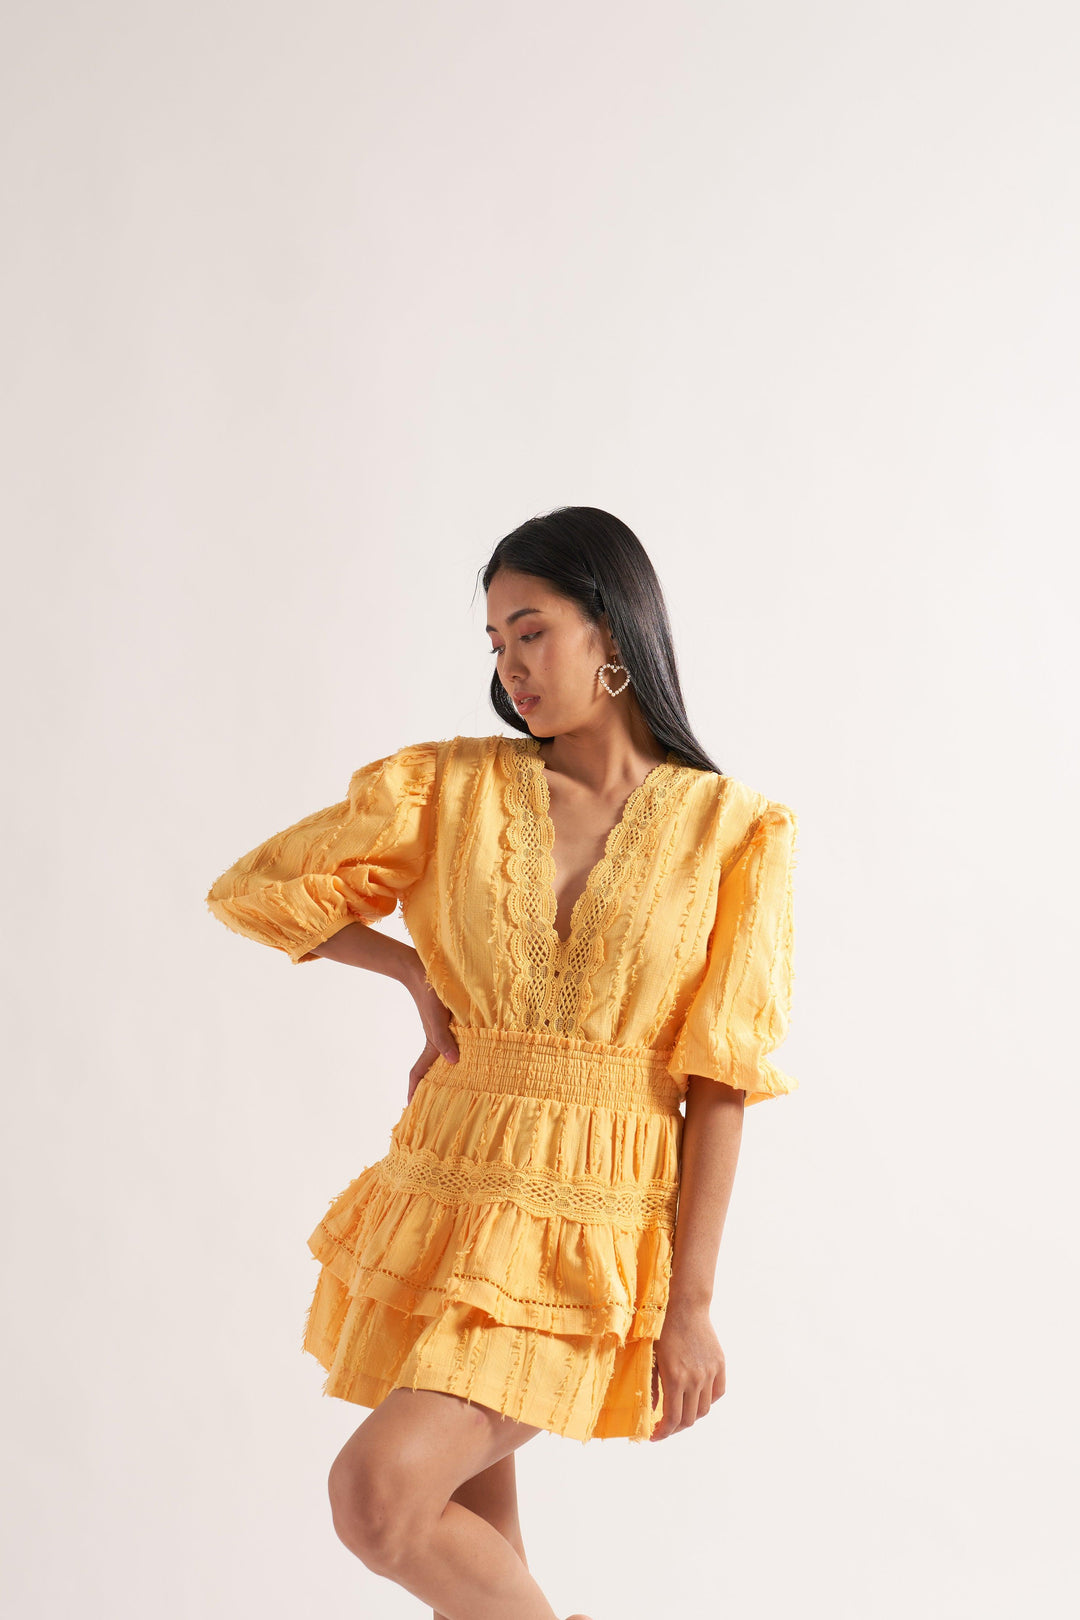 Sunset Lace dress - ANI CLOTHING